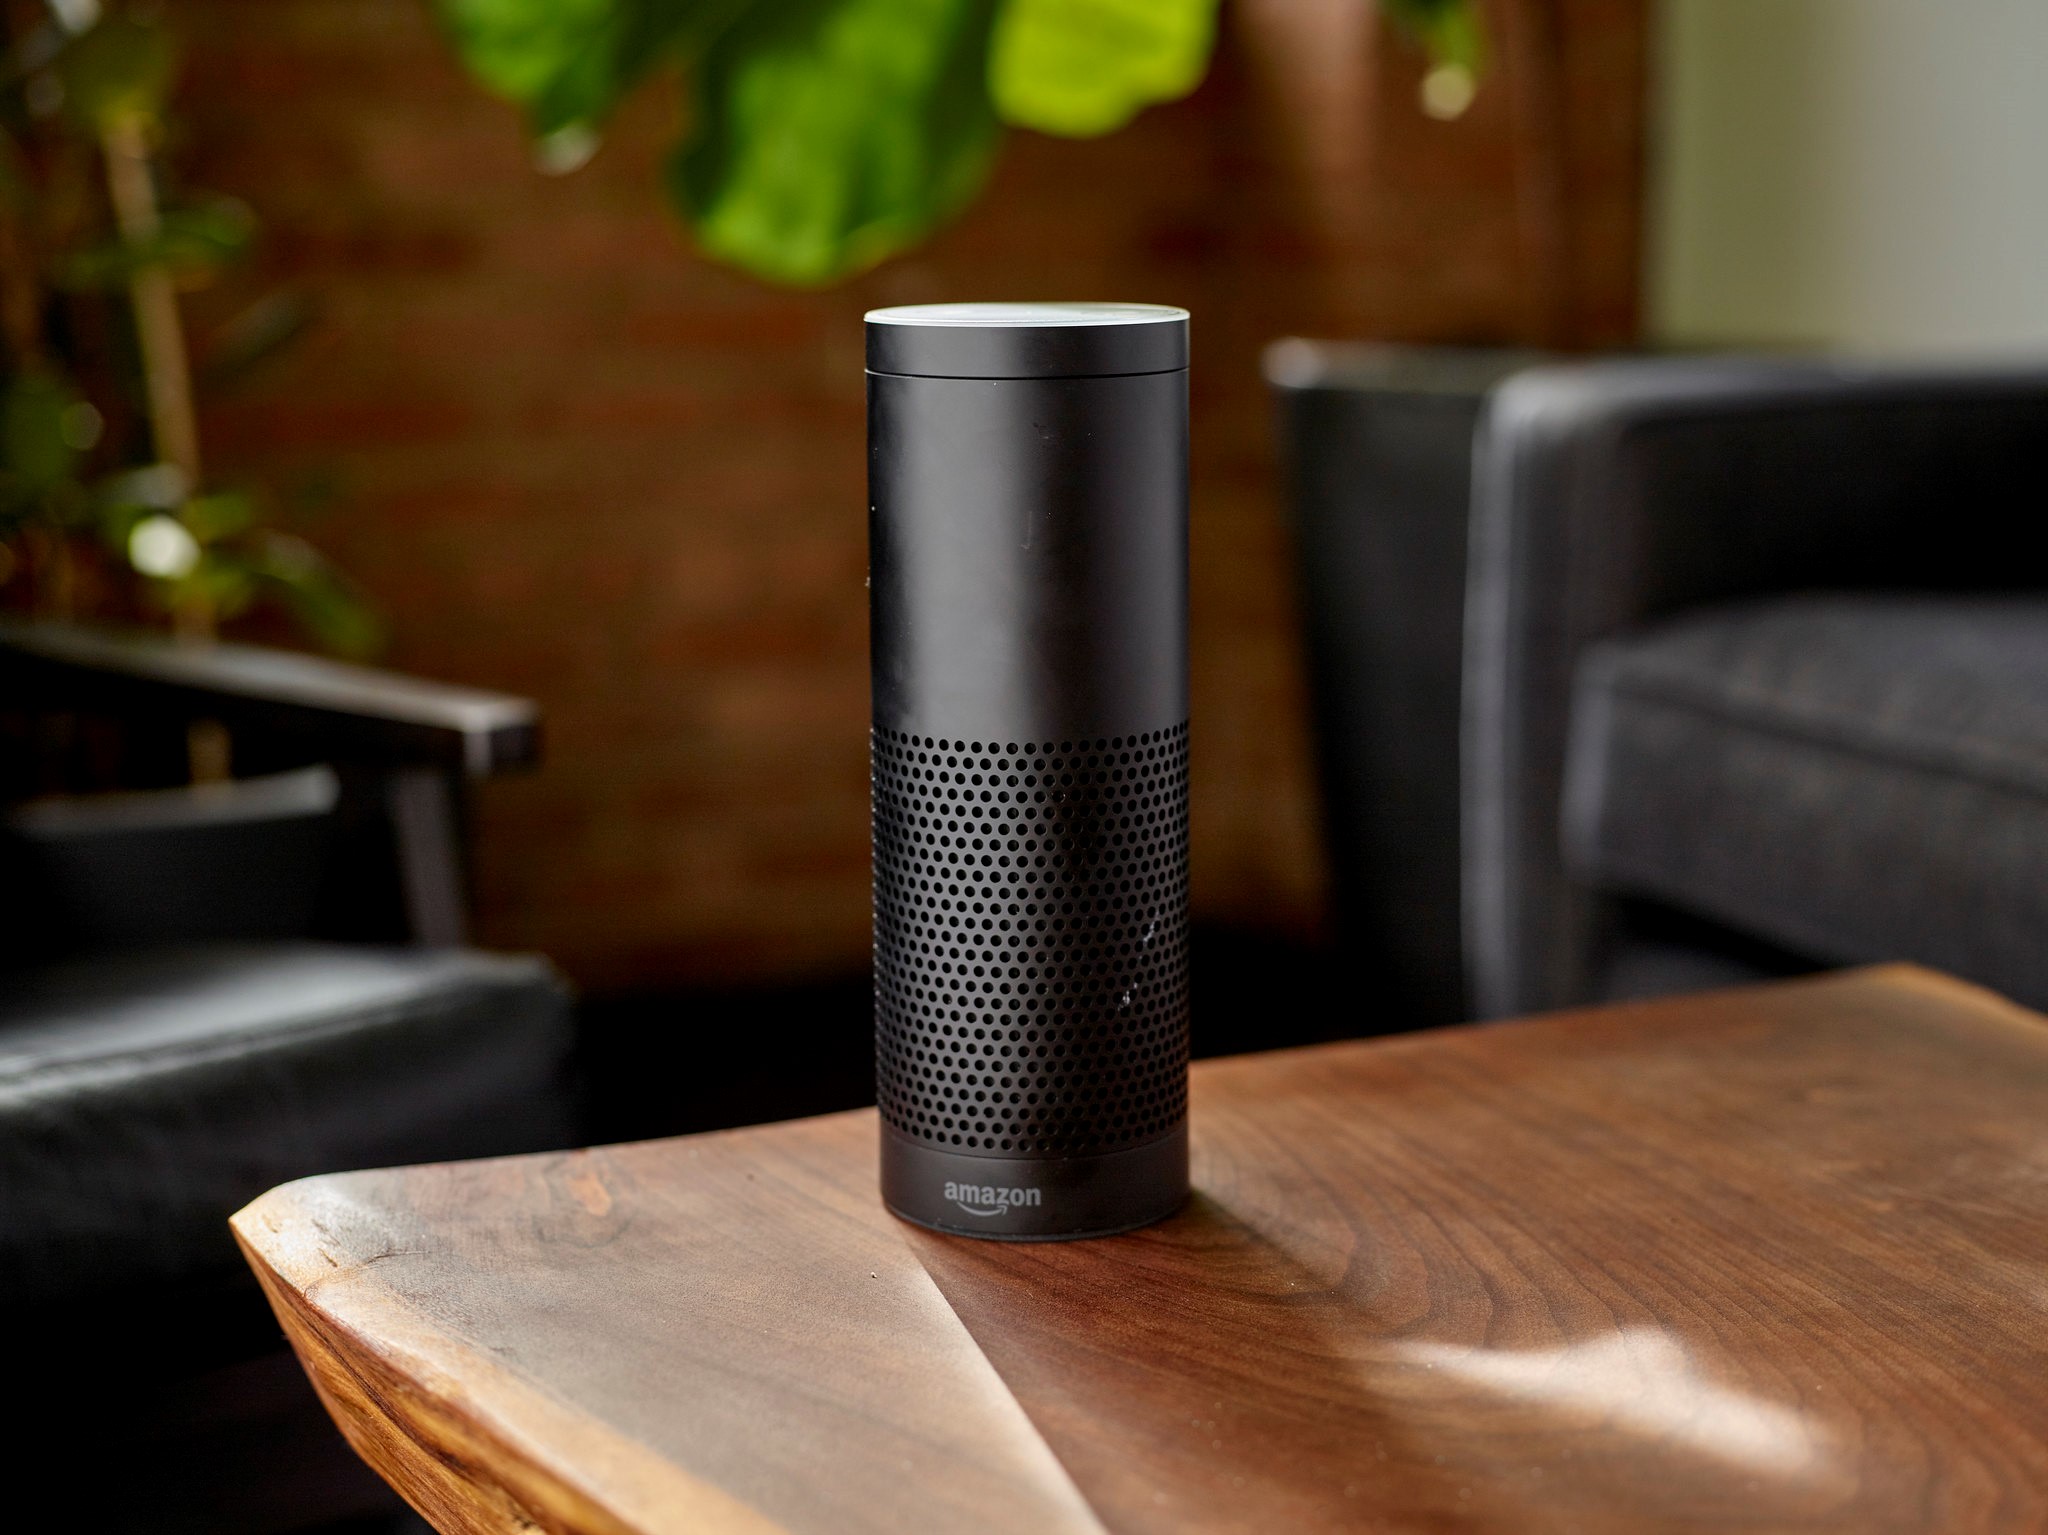 Amazon speaker standing on wooden table